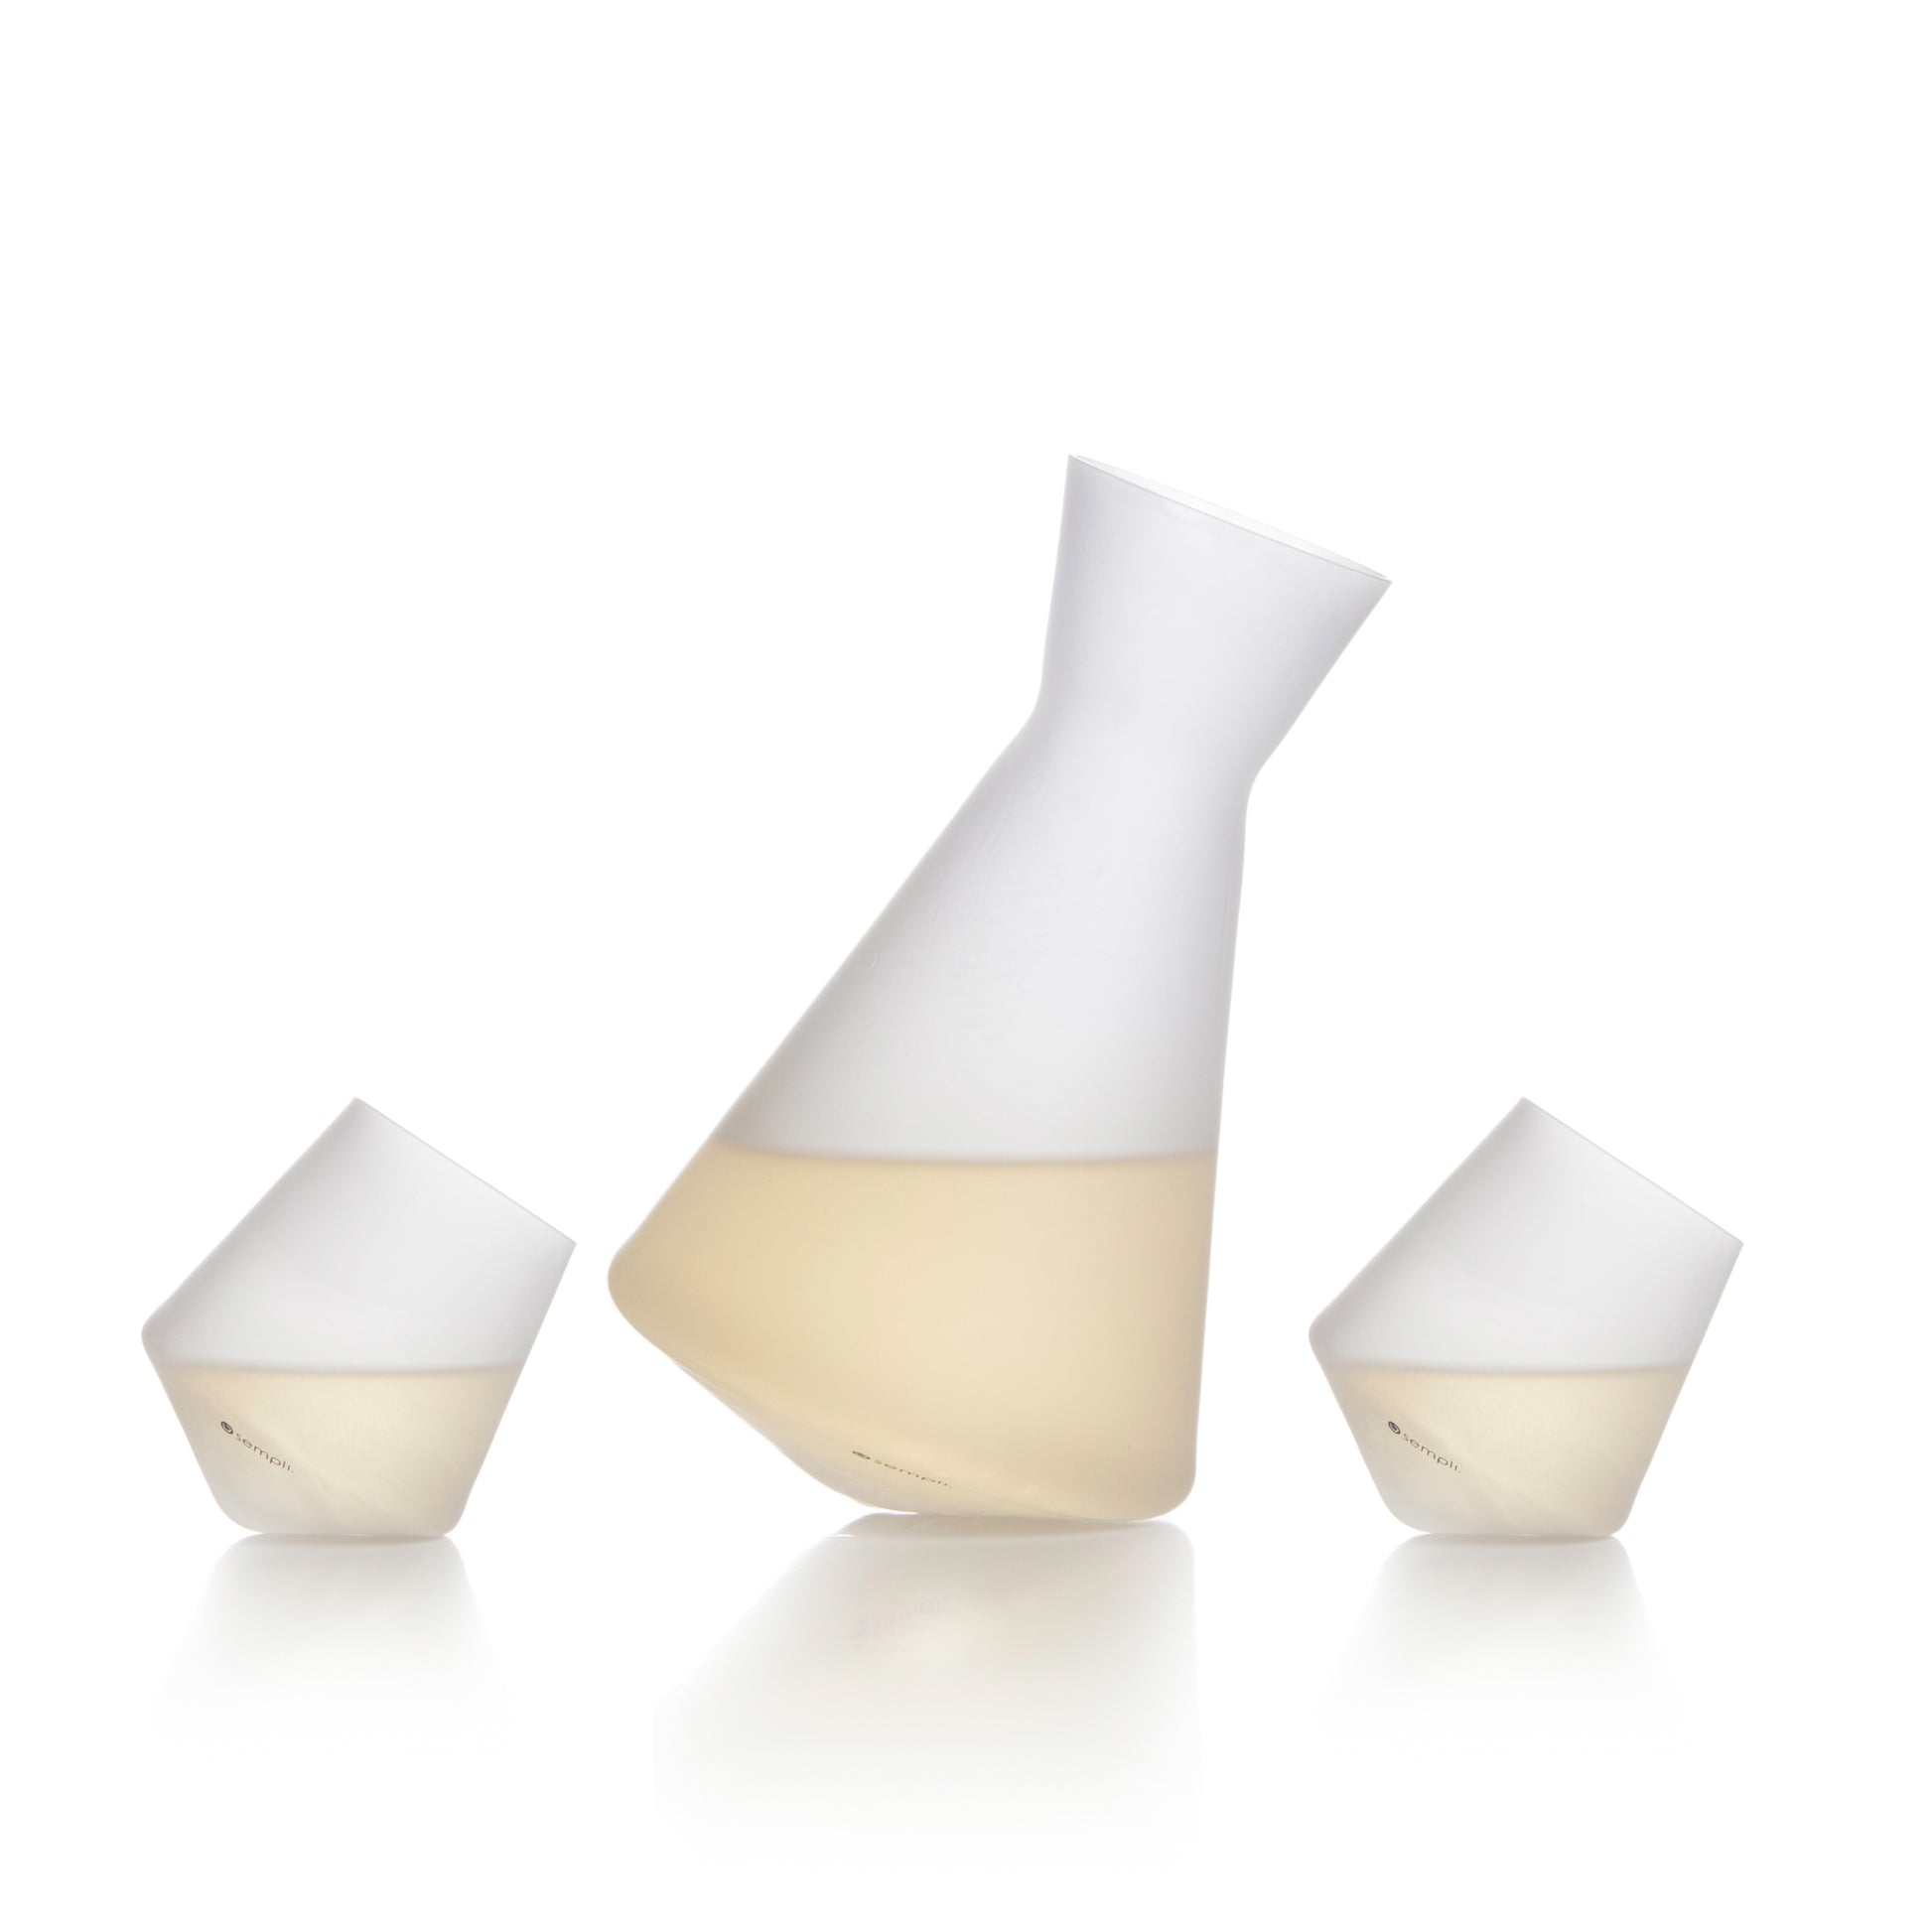 Vaso Sake Decanter and Cupa Shot Glass Set by Sempli | Luxury Glassware | Willow & Albert Home